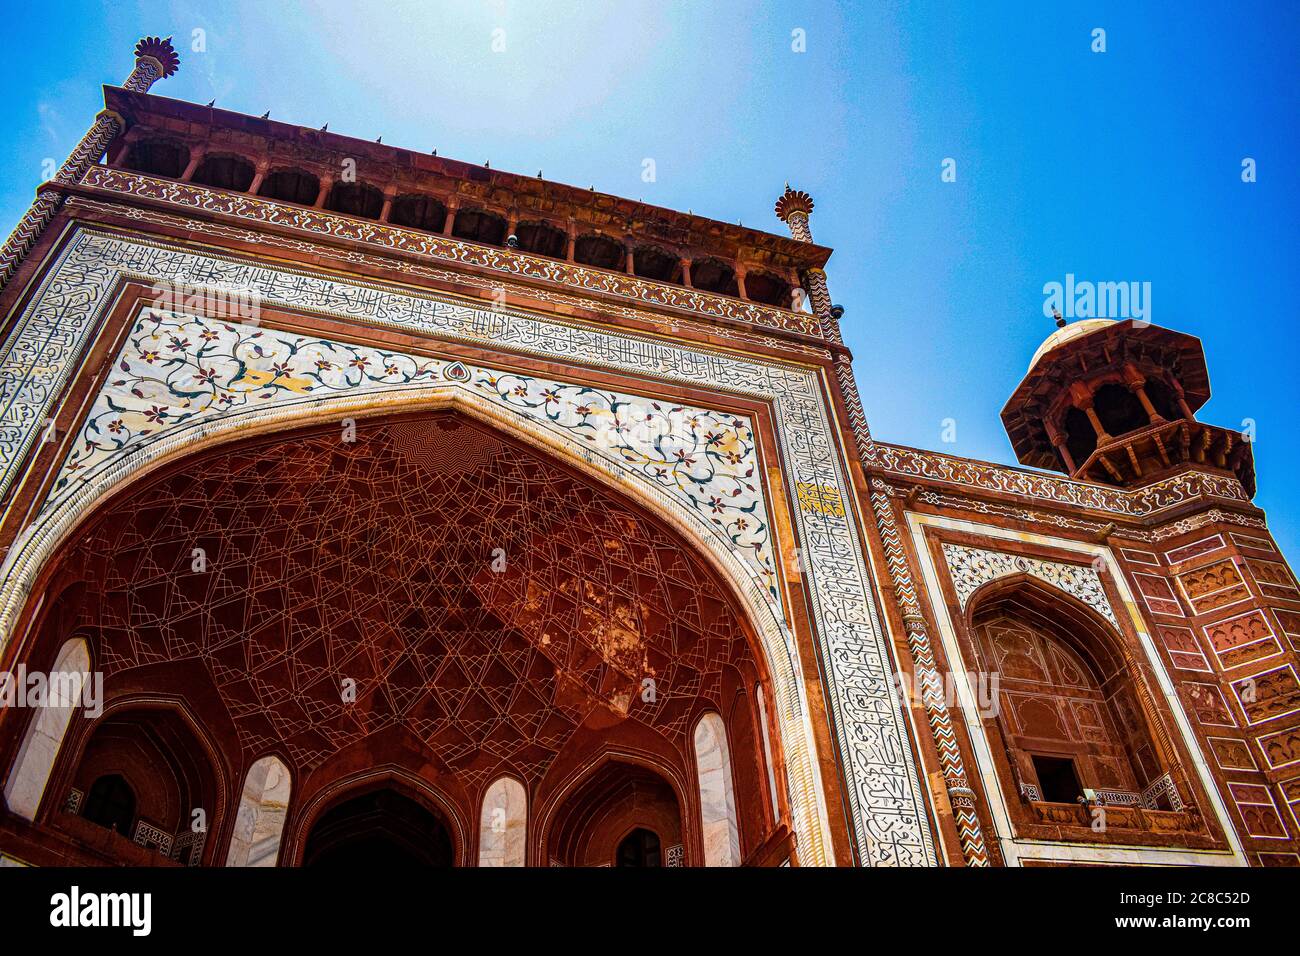 Architecture of entry gate and tomb inside for prayer at Taj Mahal. Taj ...